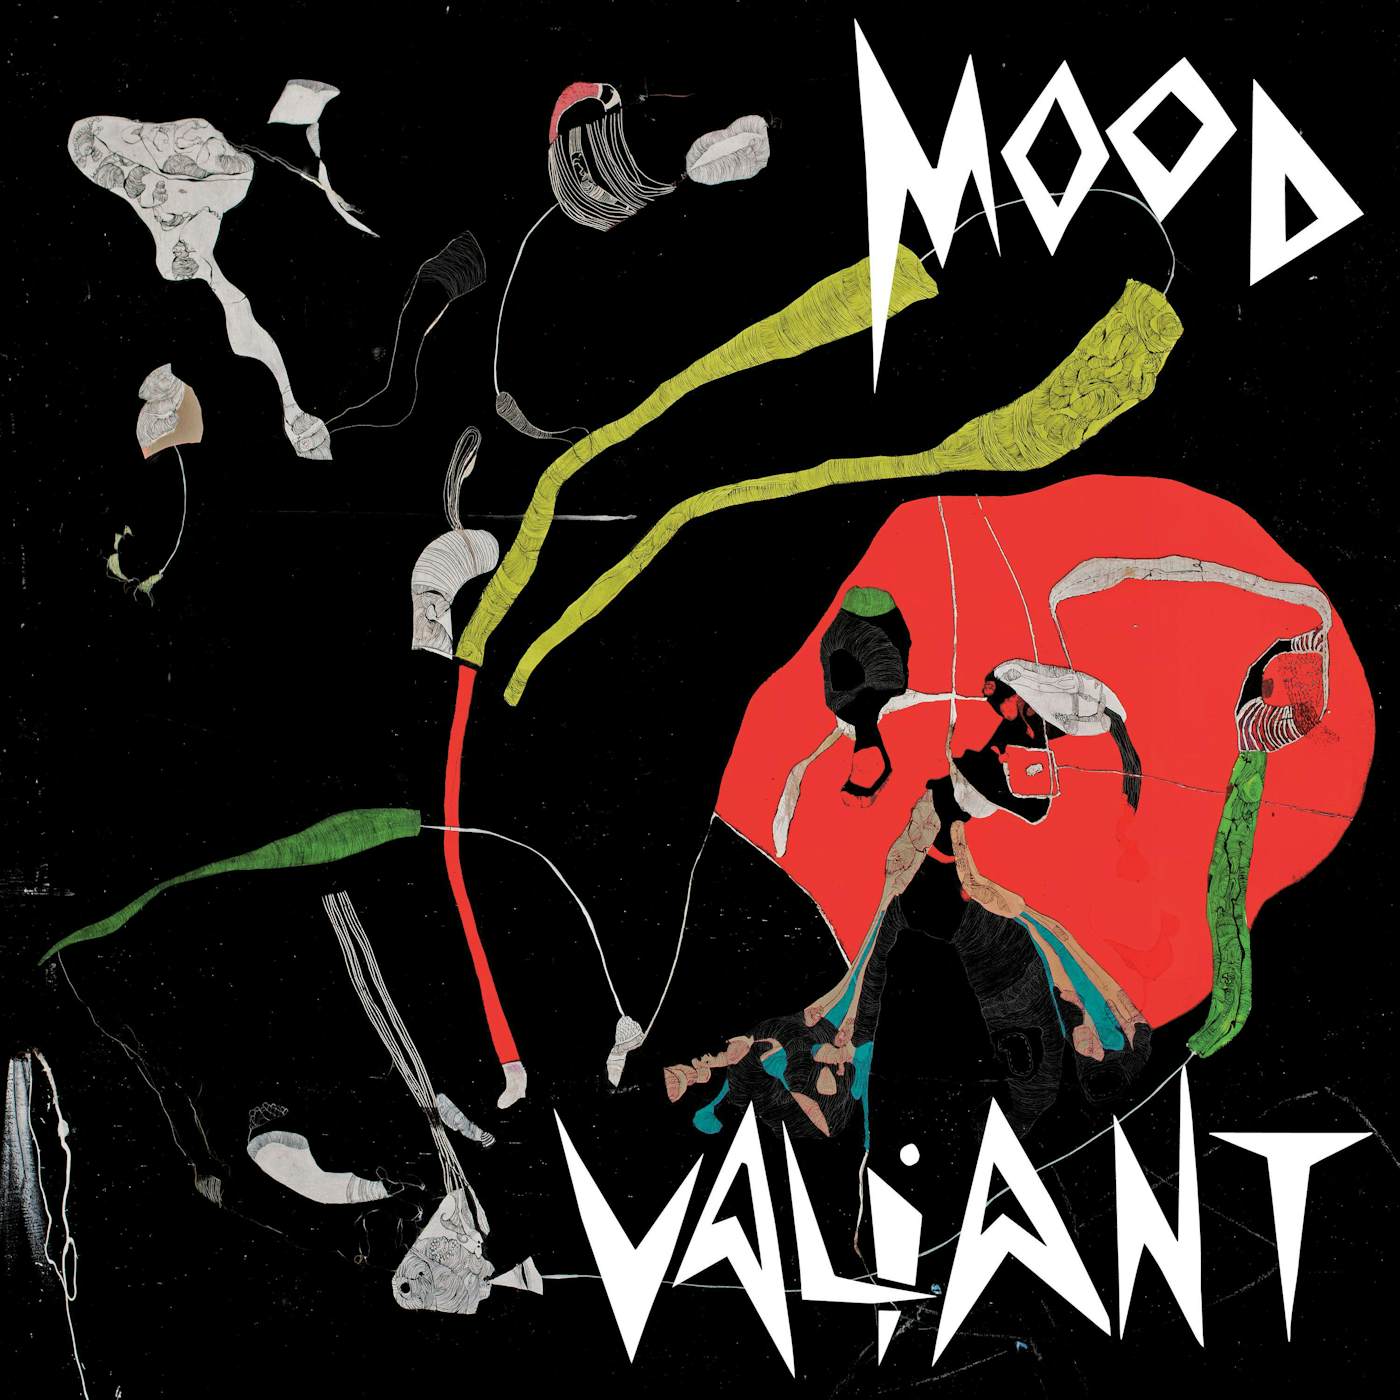 Hiatus Kaiyote Mood Valiant Vinyl Record